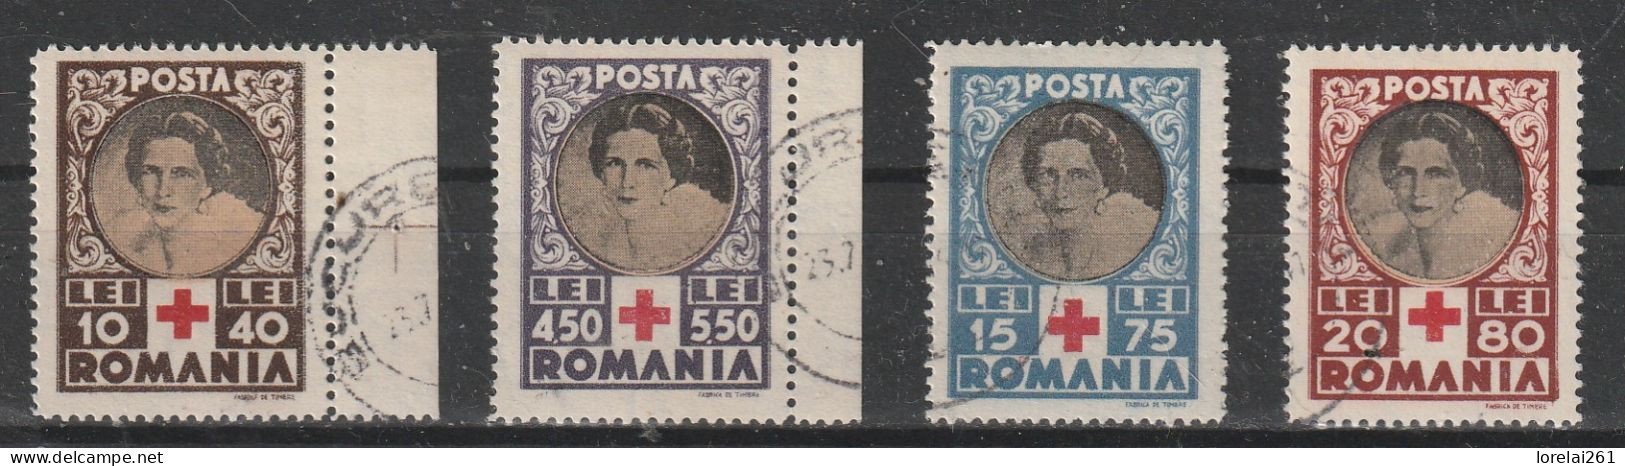 1945 - Croix Rouge/Reine Elena Mi No 827/830 - Used Stamps